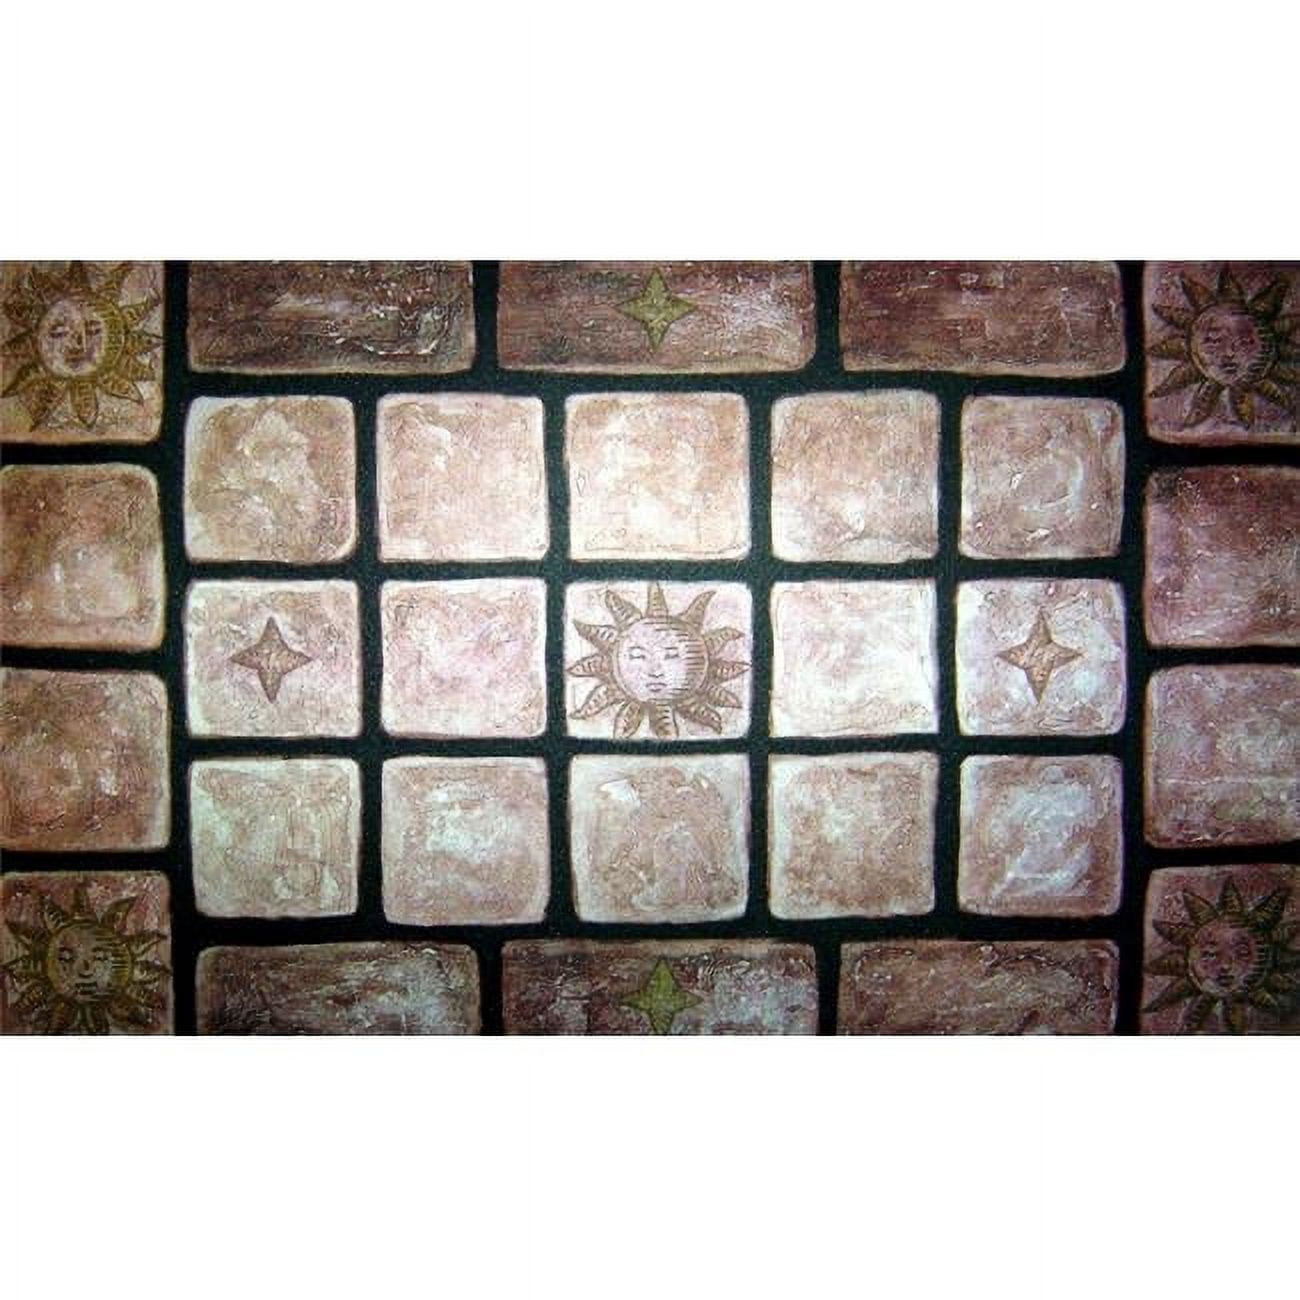 Picture of Custom Printed Rugs CPR014 Decorative Tiles Doormat Rug - 18 x 30 in.